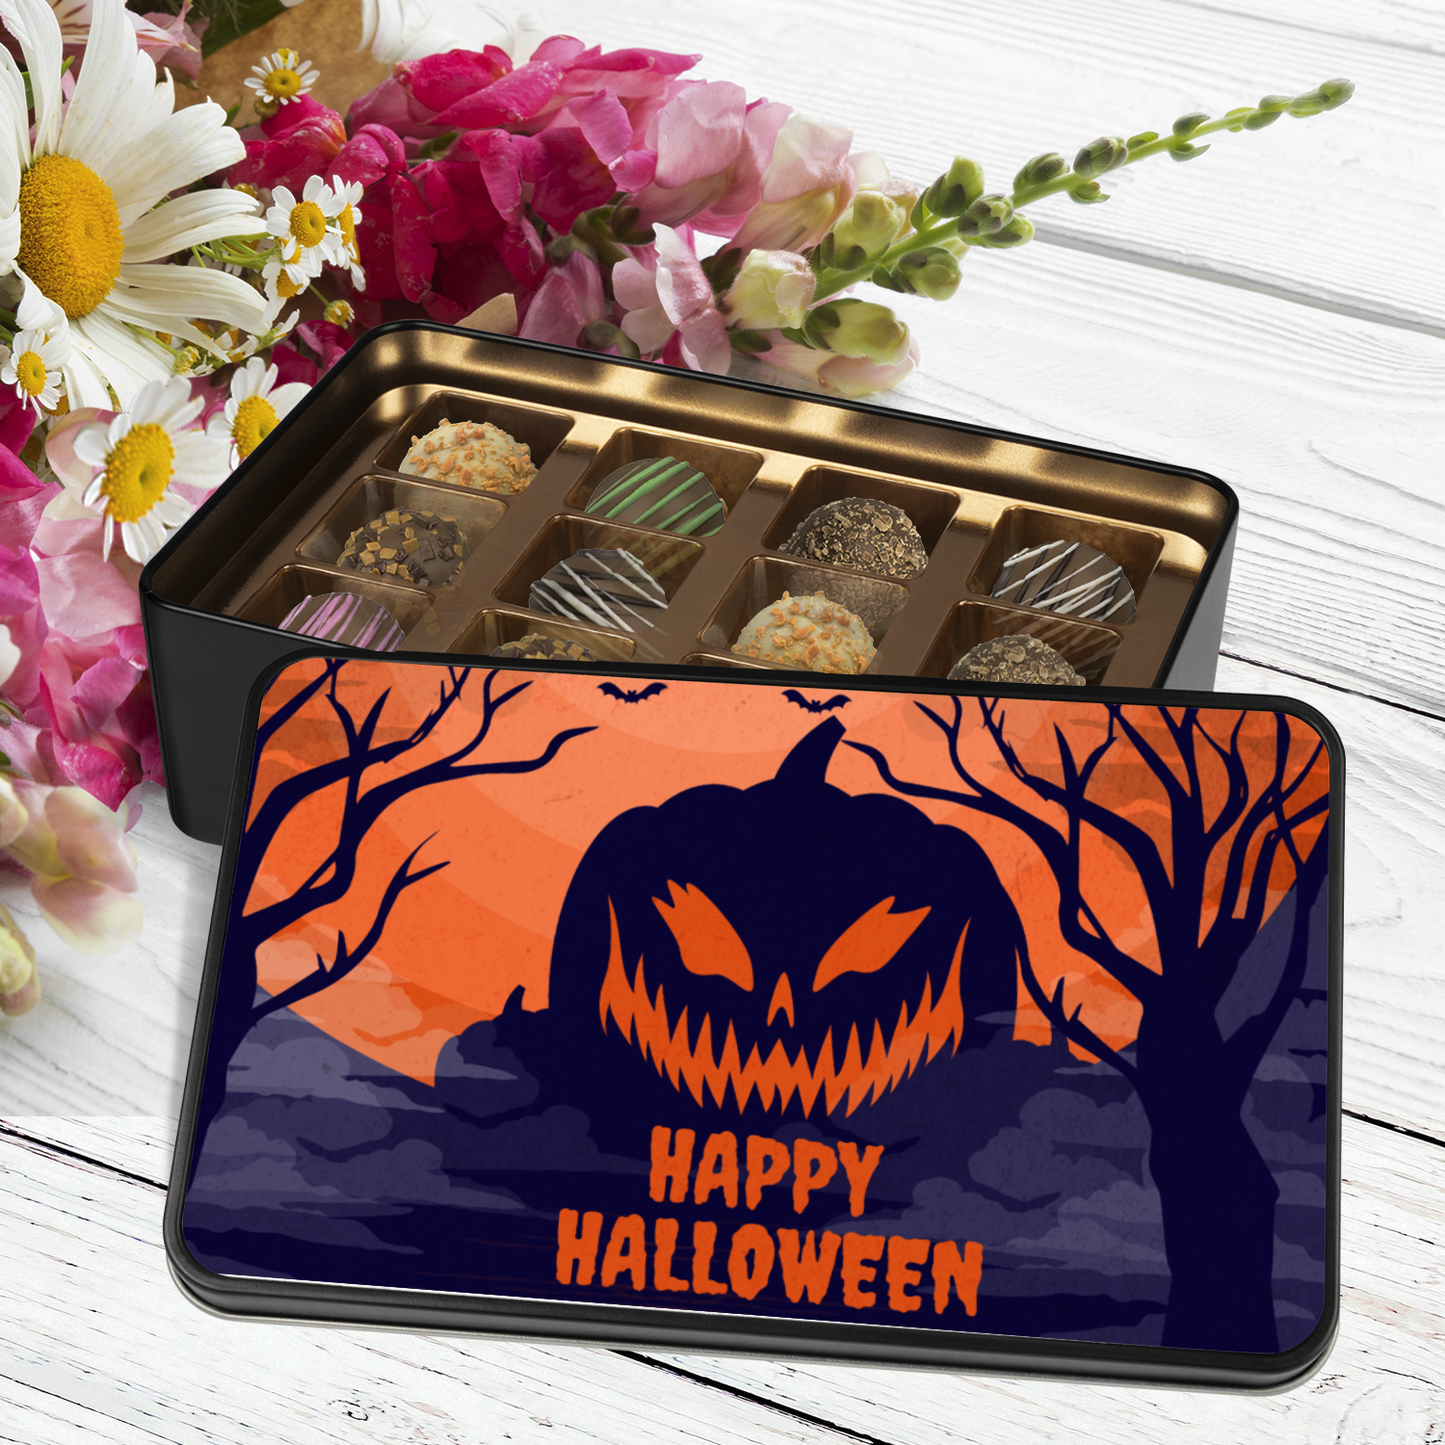 Happy Halloween Chocolate Truffles - Keepsake Tin